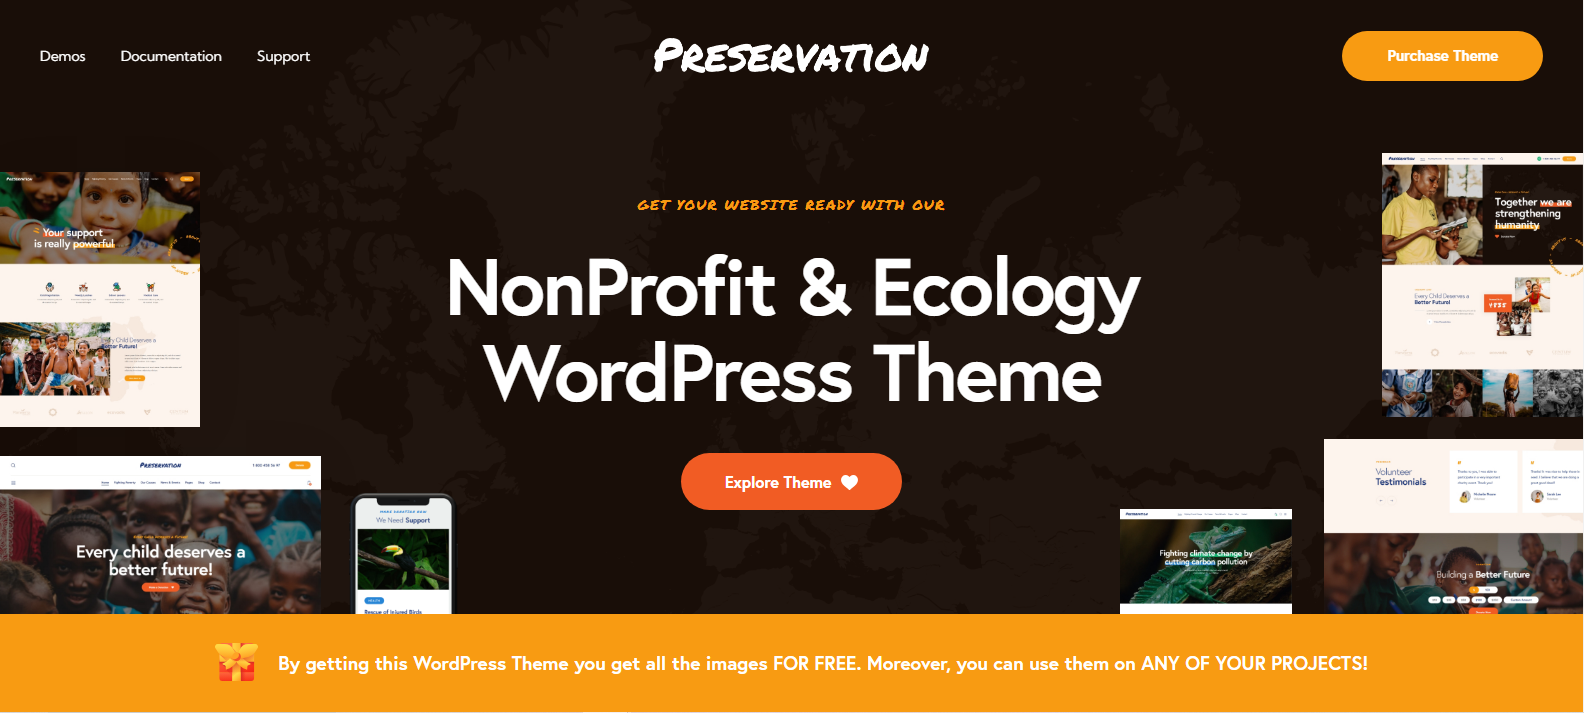 Preservation v1.0 - NonProfit & Ecology WordPress Theme